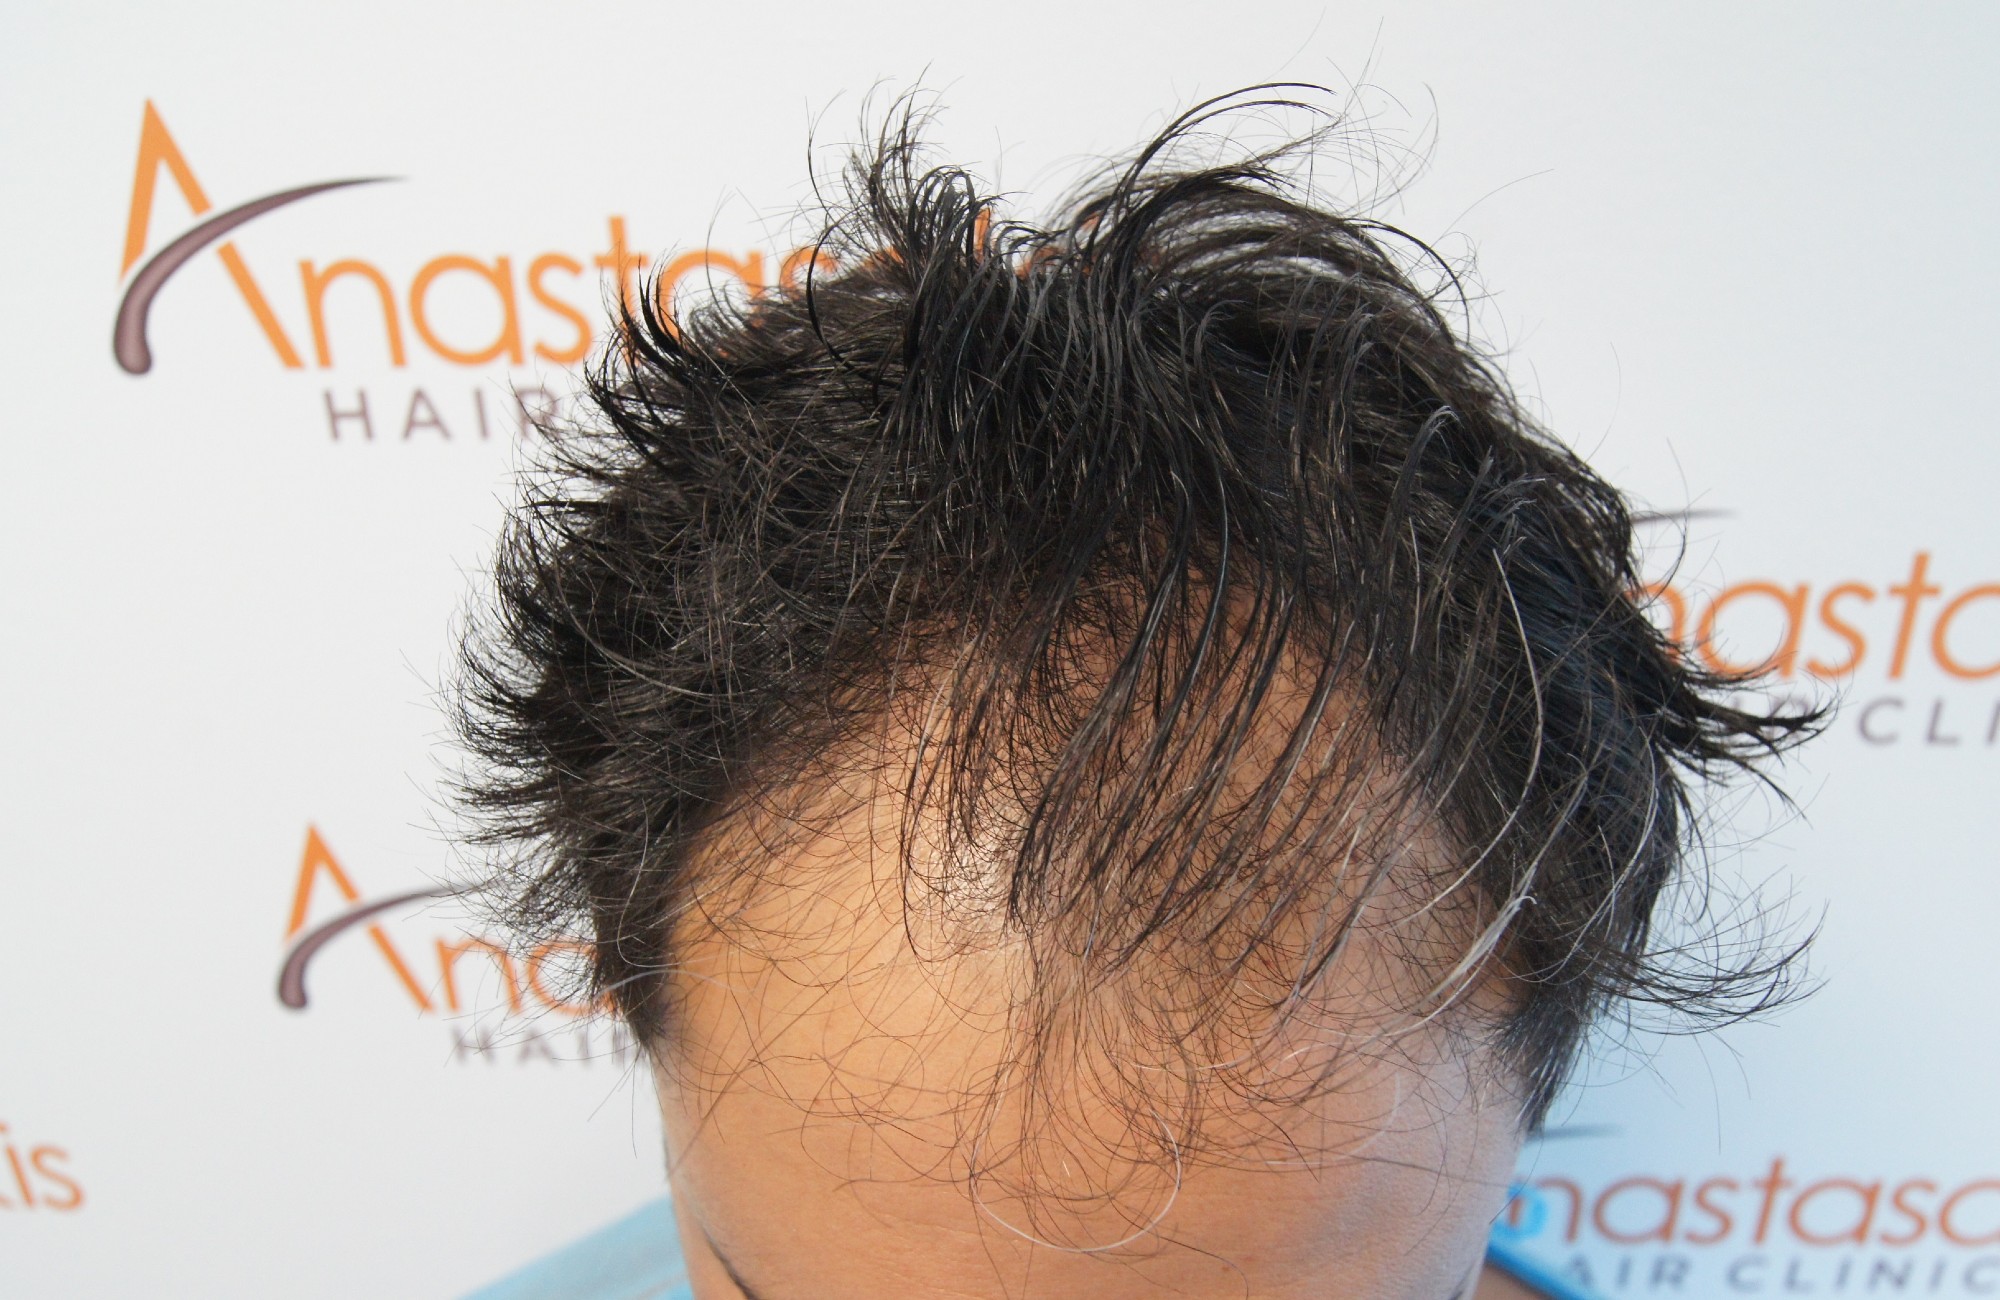 anastasakis hair clinic - περιστατικο πριν τη μεταμοσχευση μαλλιων του με fue